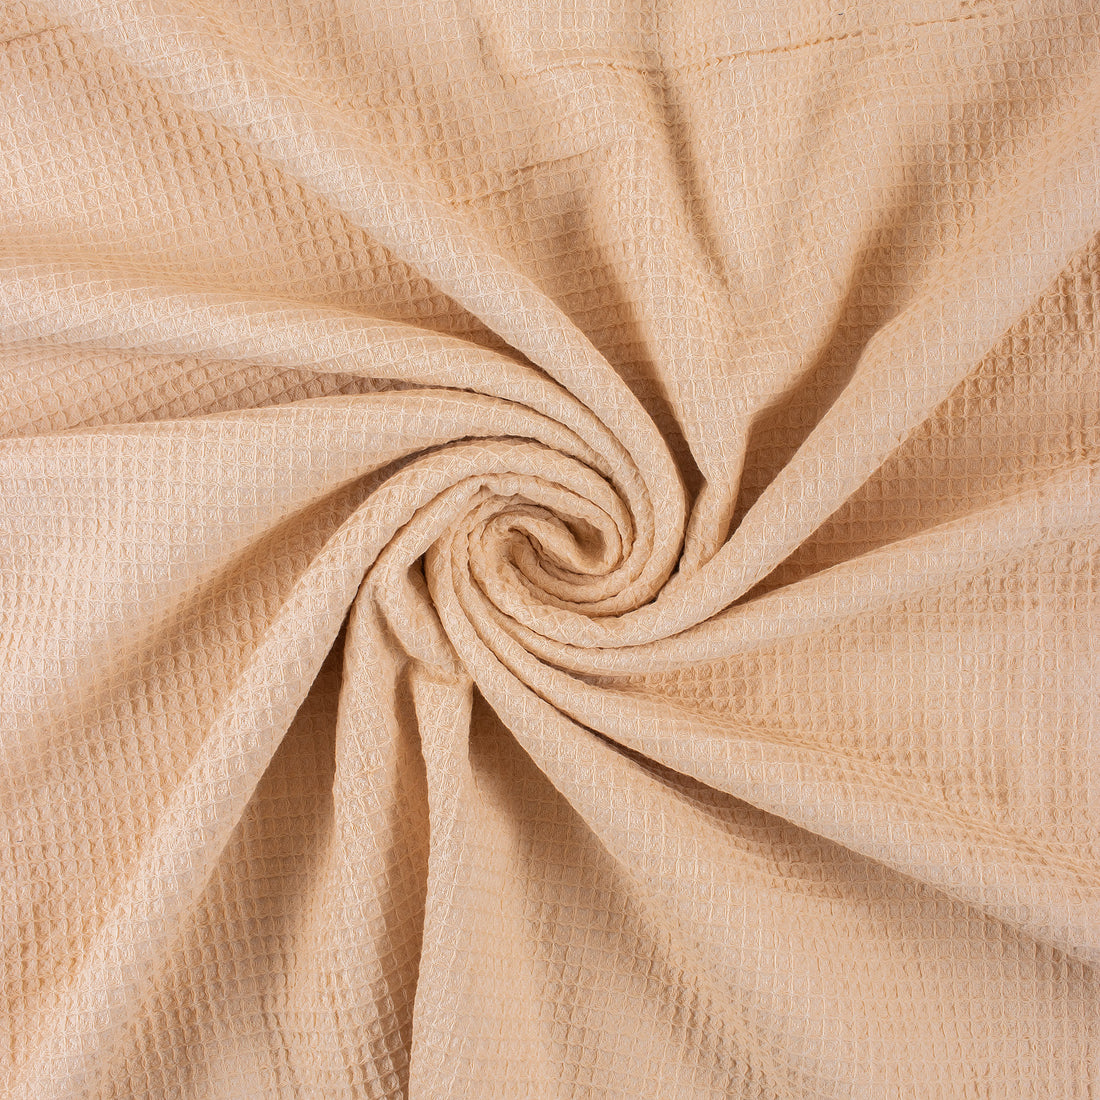 Solid Cream Plain Cotton Fabric